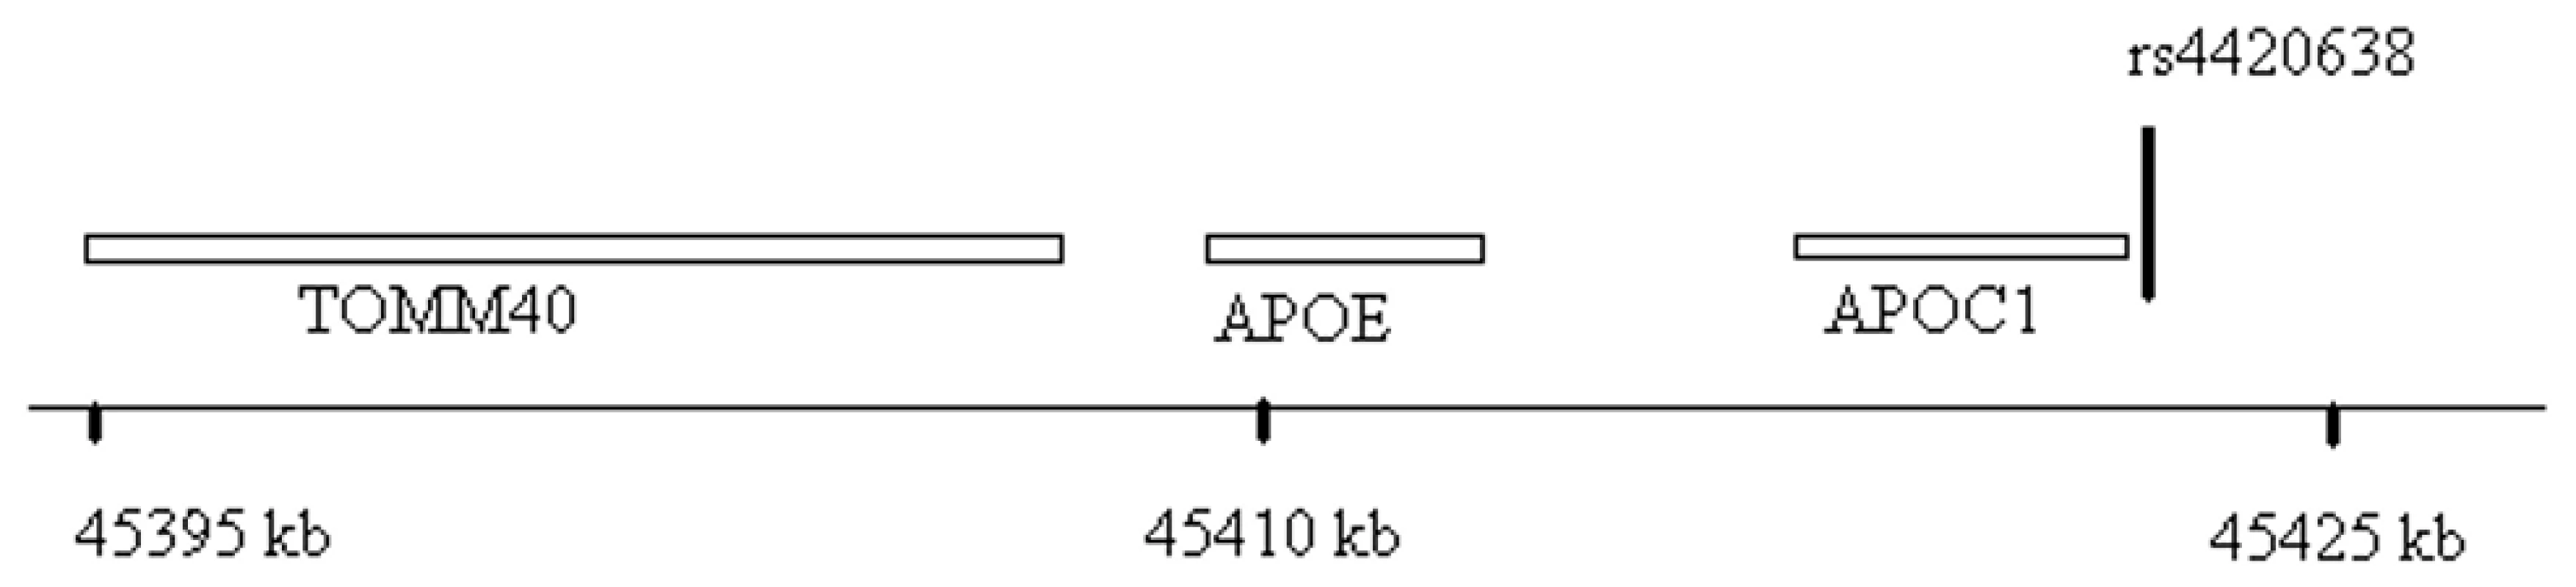 Genomic region surrounding the top hit near <i>APOE/APOC1</i>.